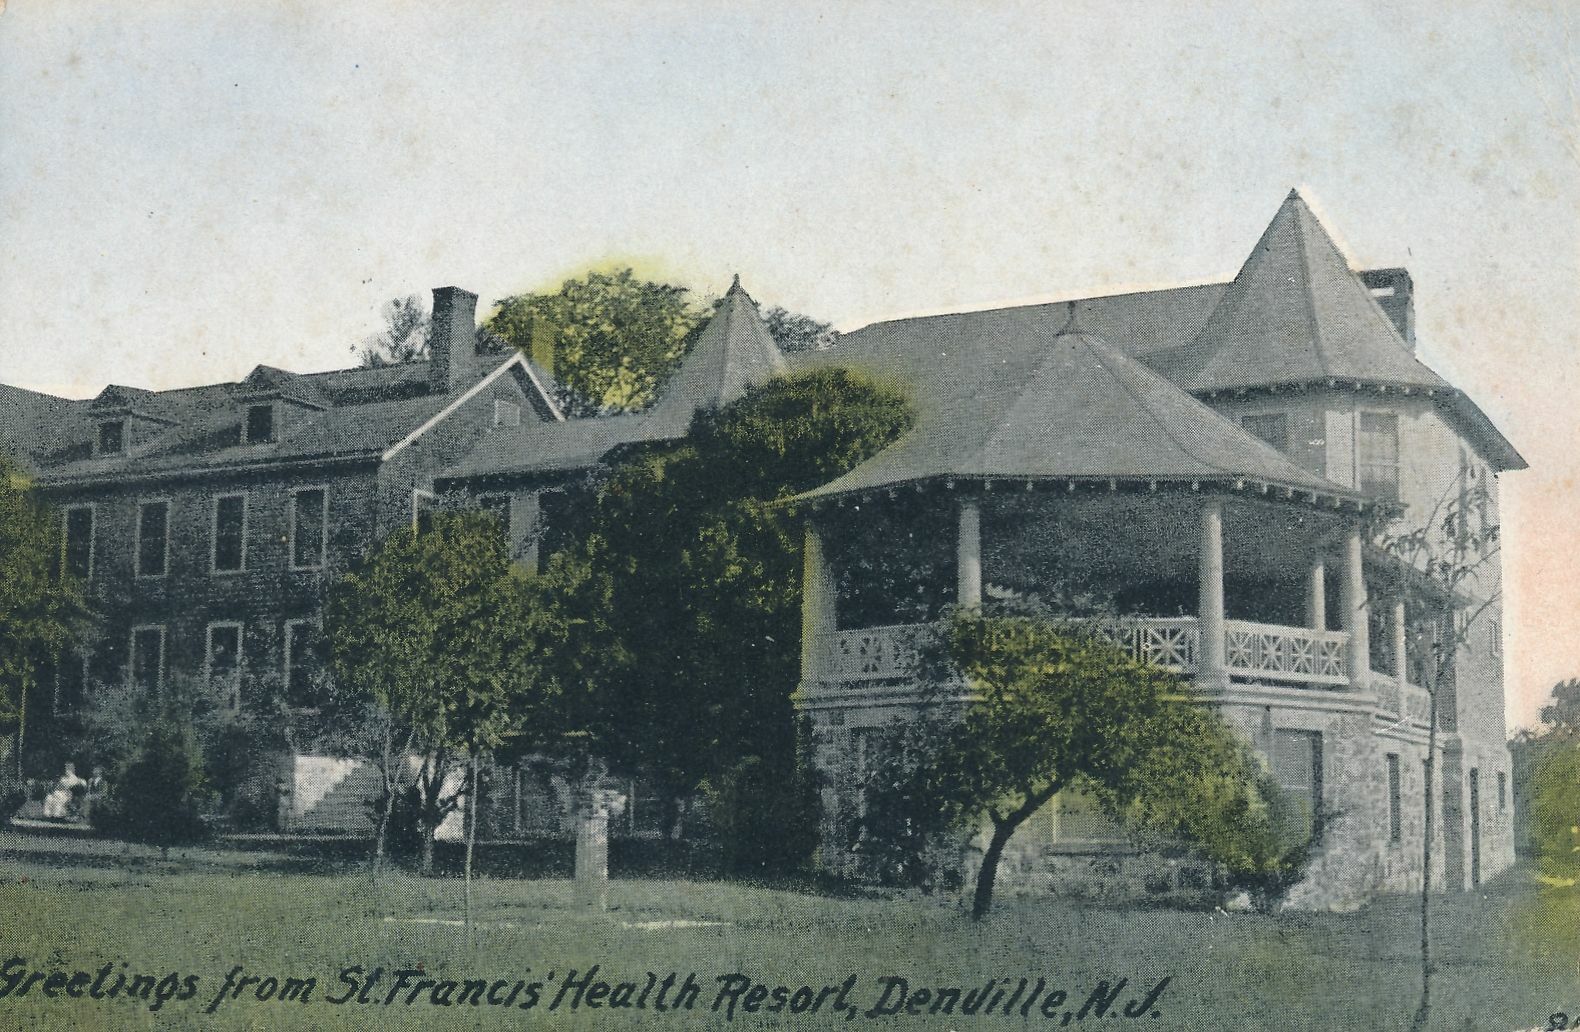 DENVILLE NJ - St. Francis Health Resort Greetings